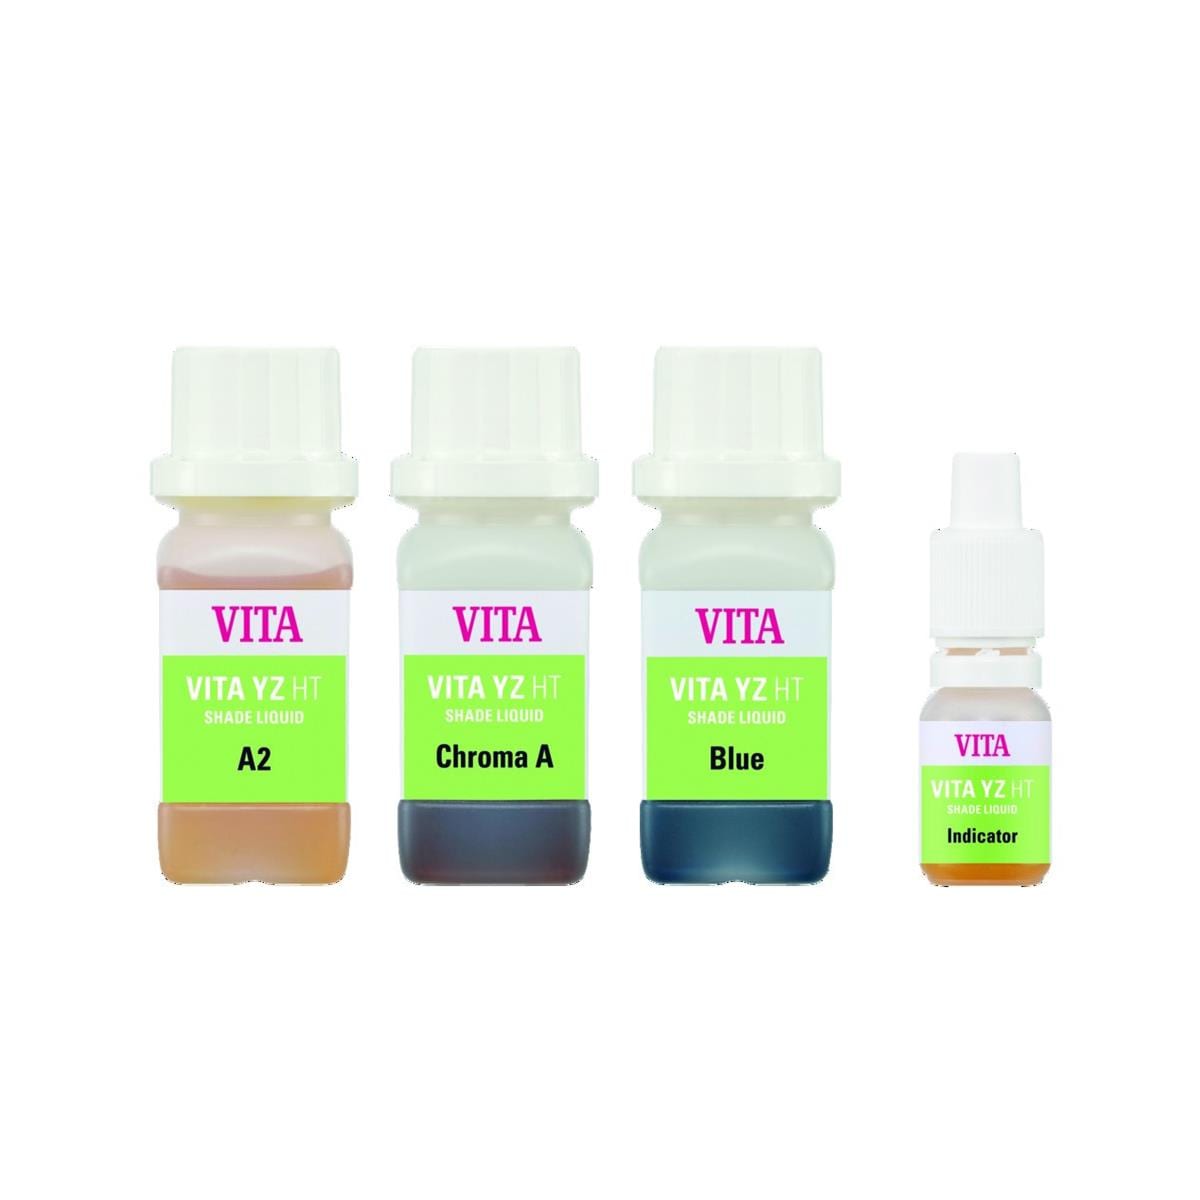 YZ HT Shade Liquids VITA 2L1,5 le flacon de 50 ml